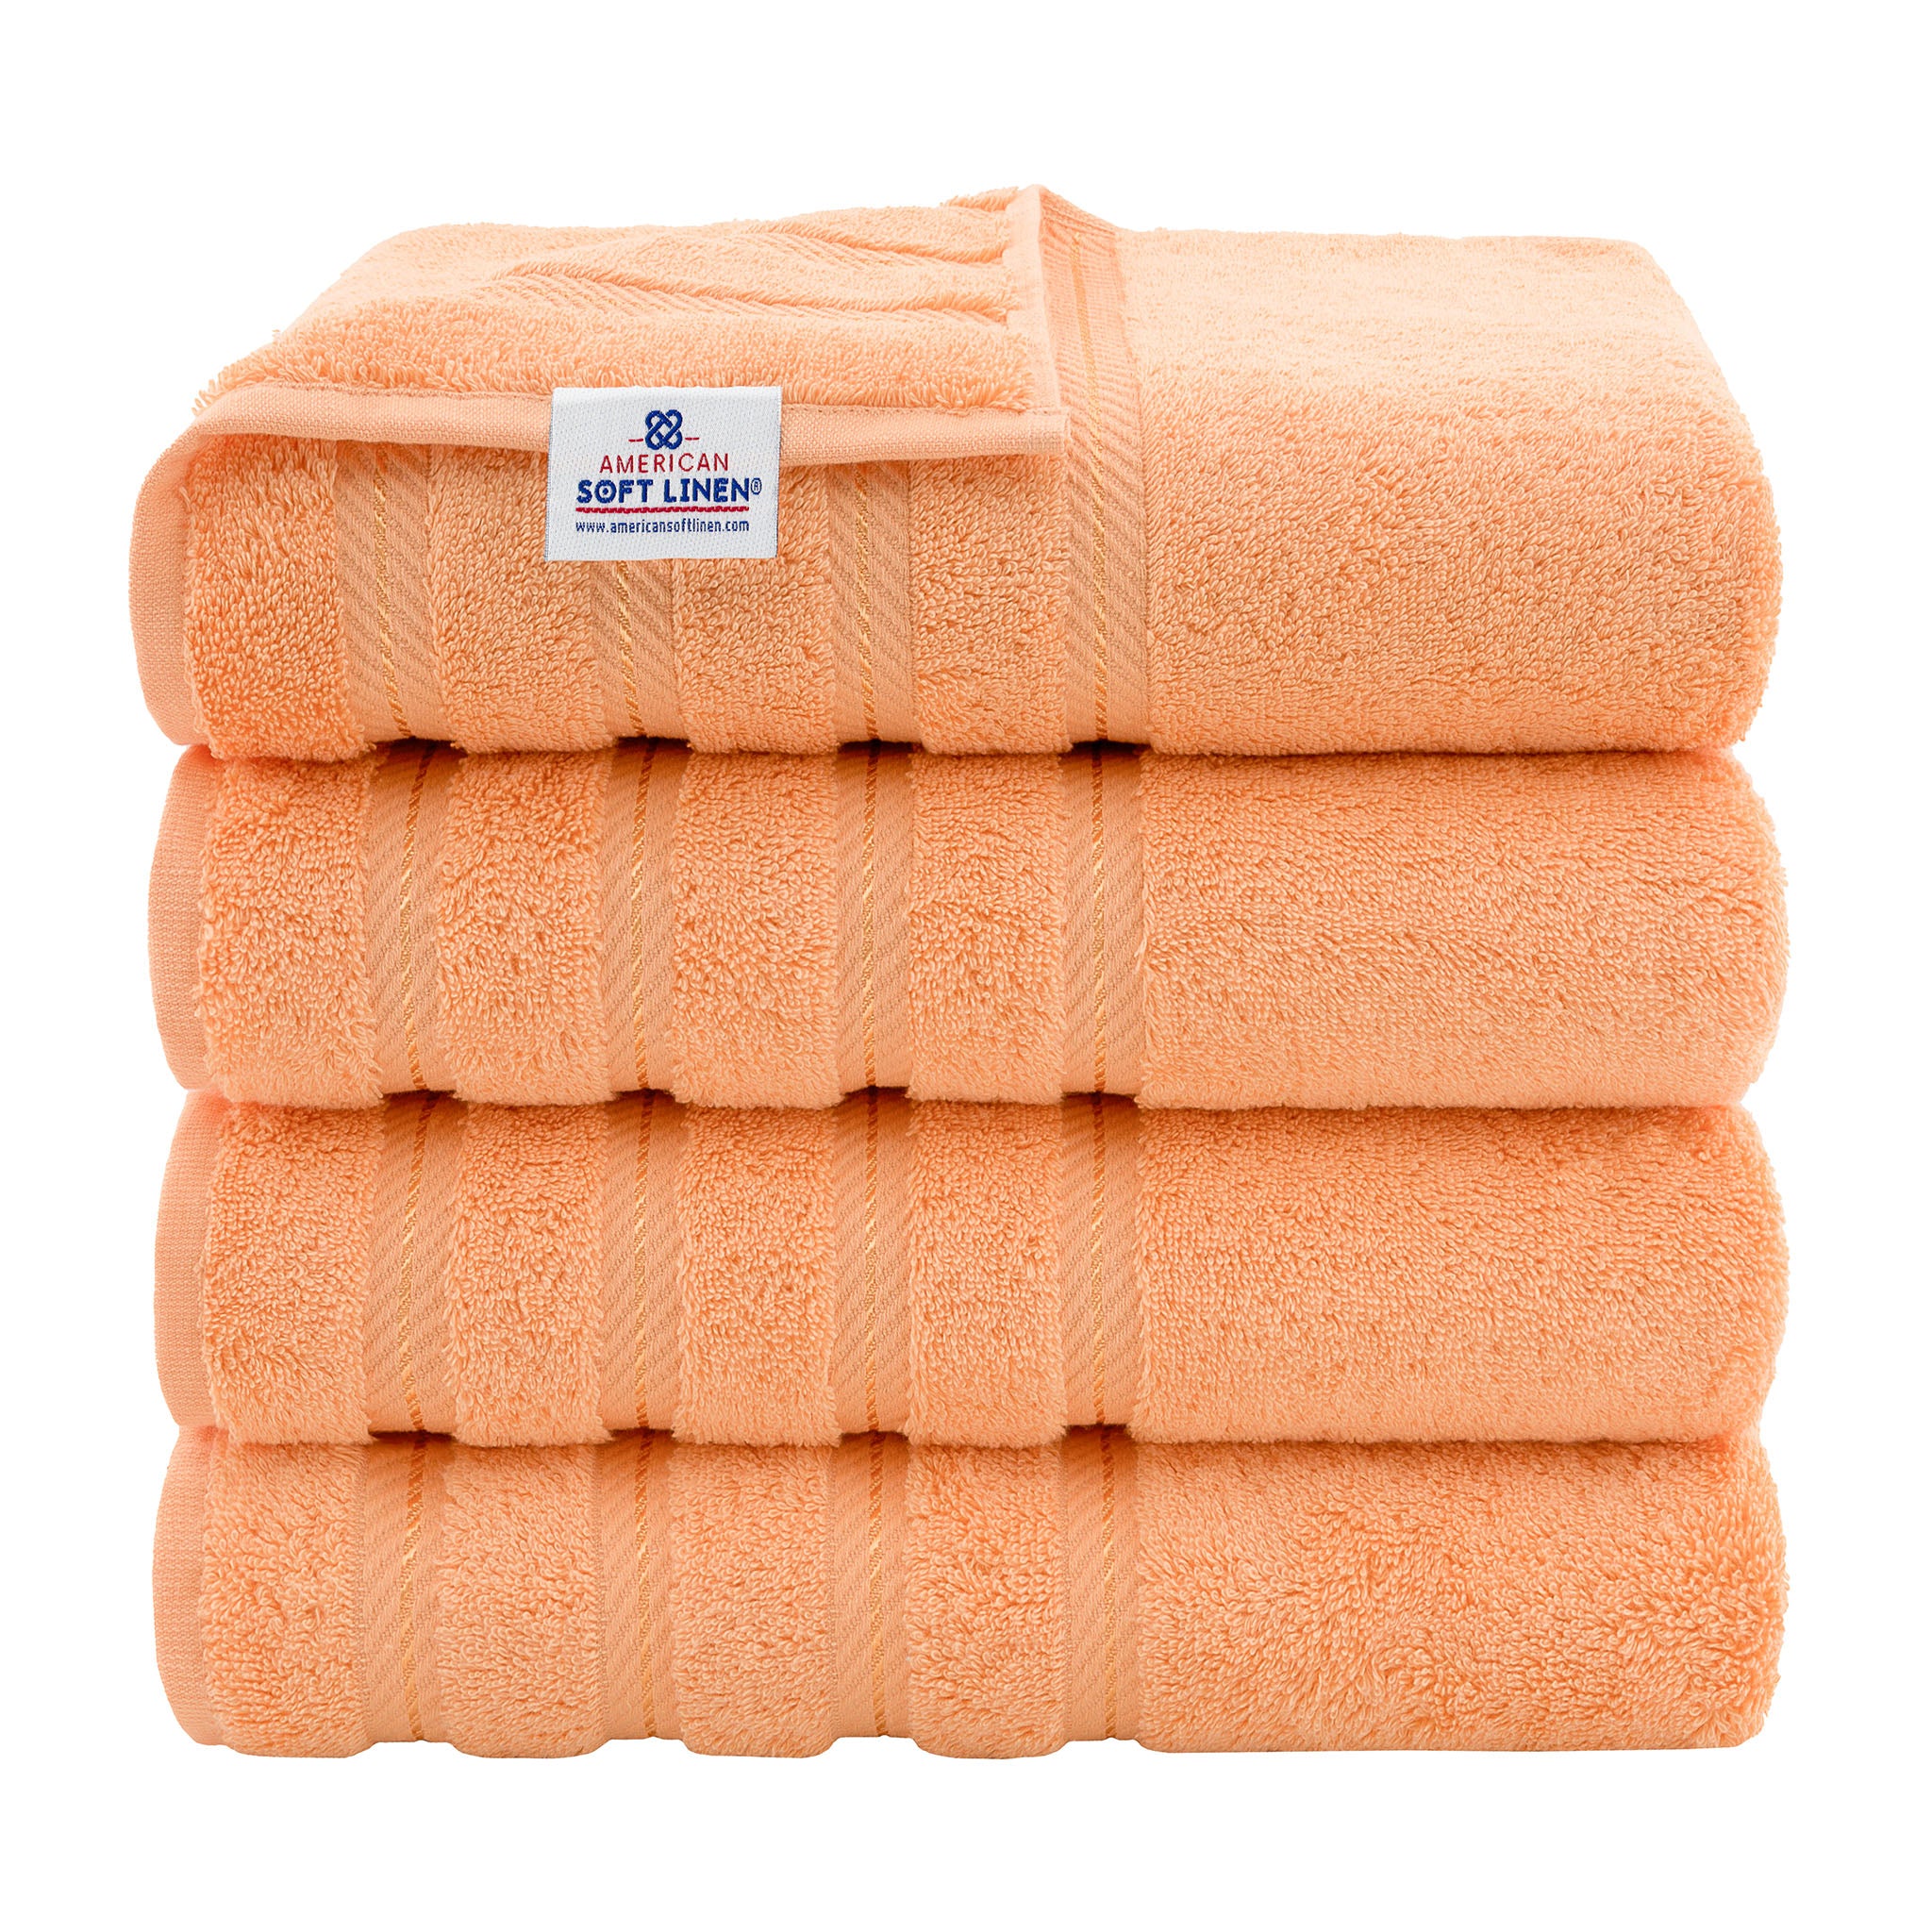 American Soft Linen 100% Turkish Cotton 4 Pack Bath Towel Set Wholesale malibu-peach-1